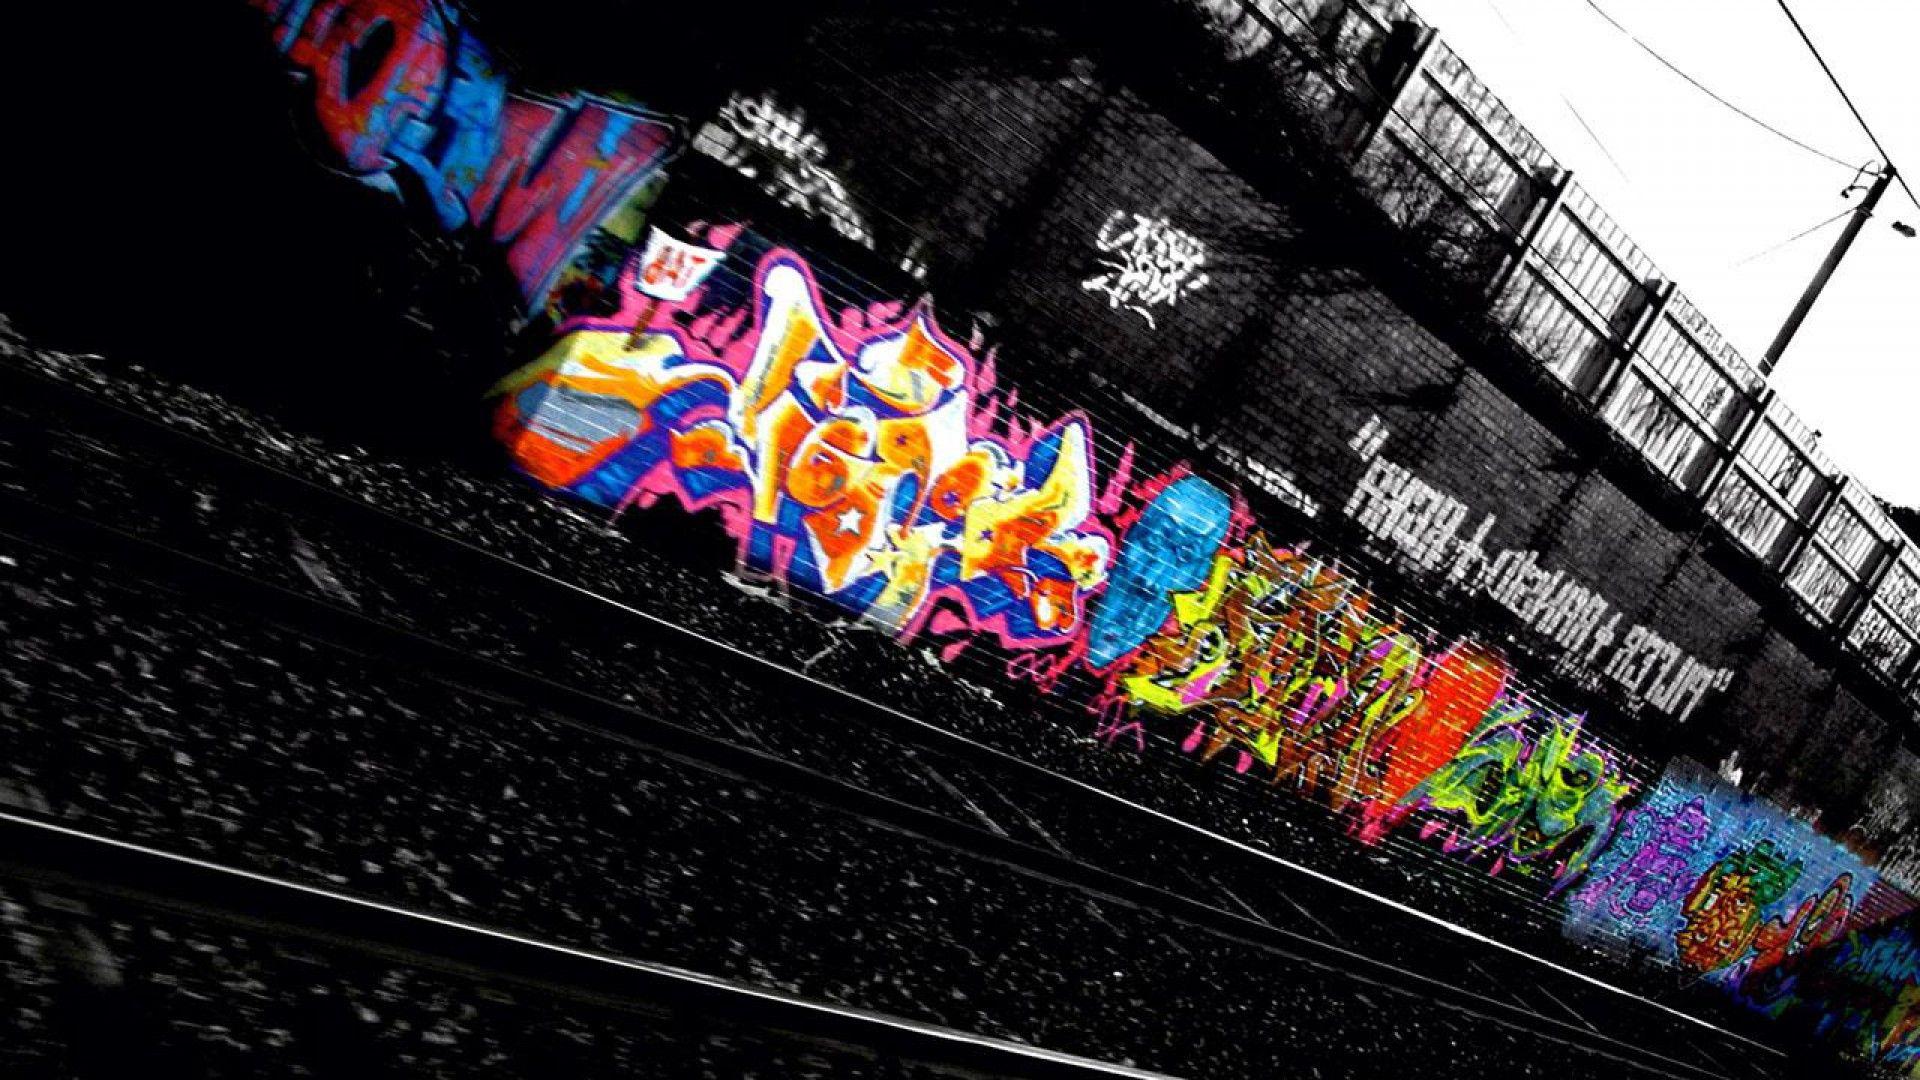 Graffiti Photos Download The BEST Free Graffiti Stock Photos  HD Images